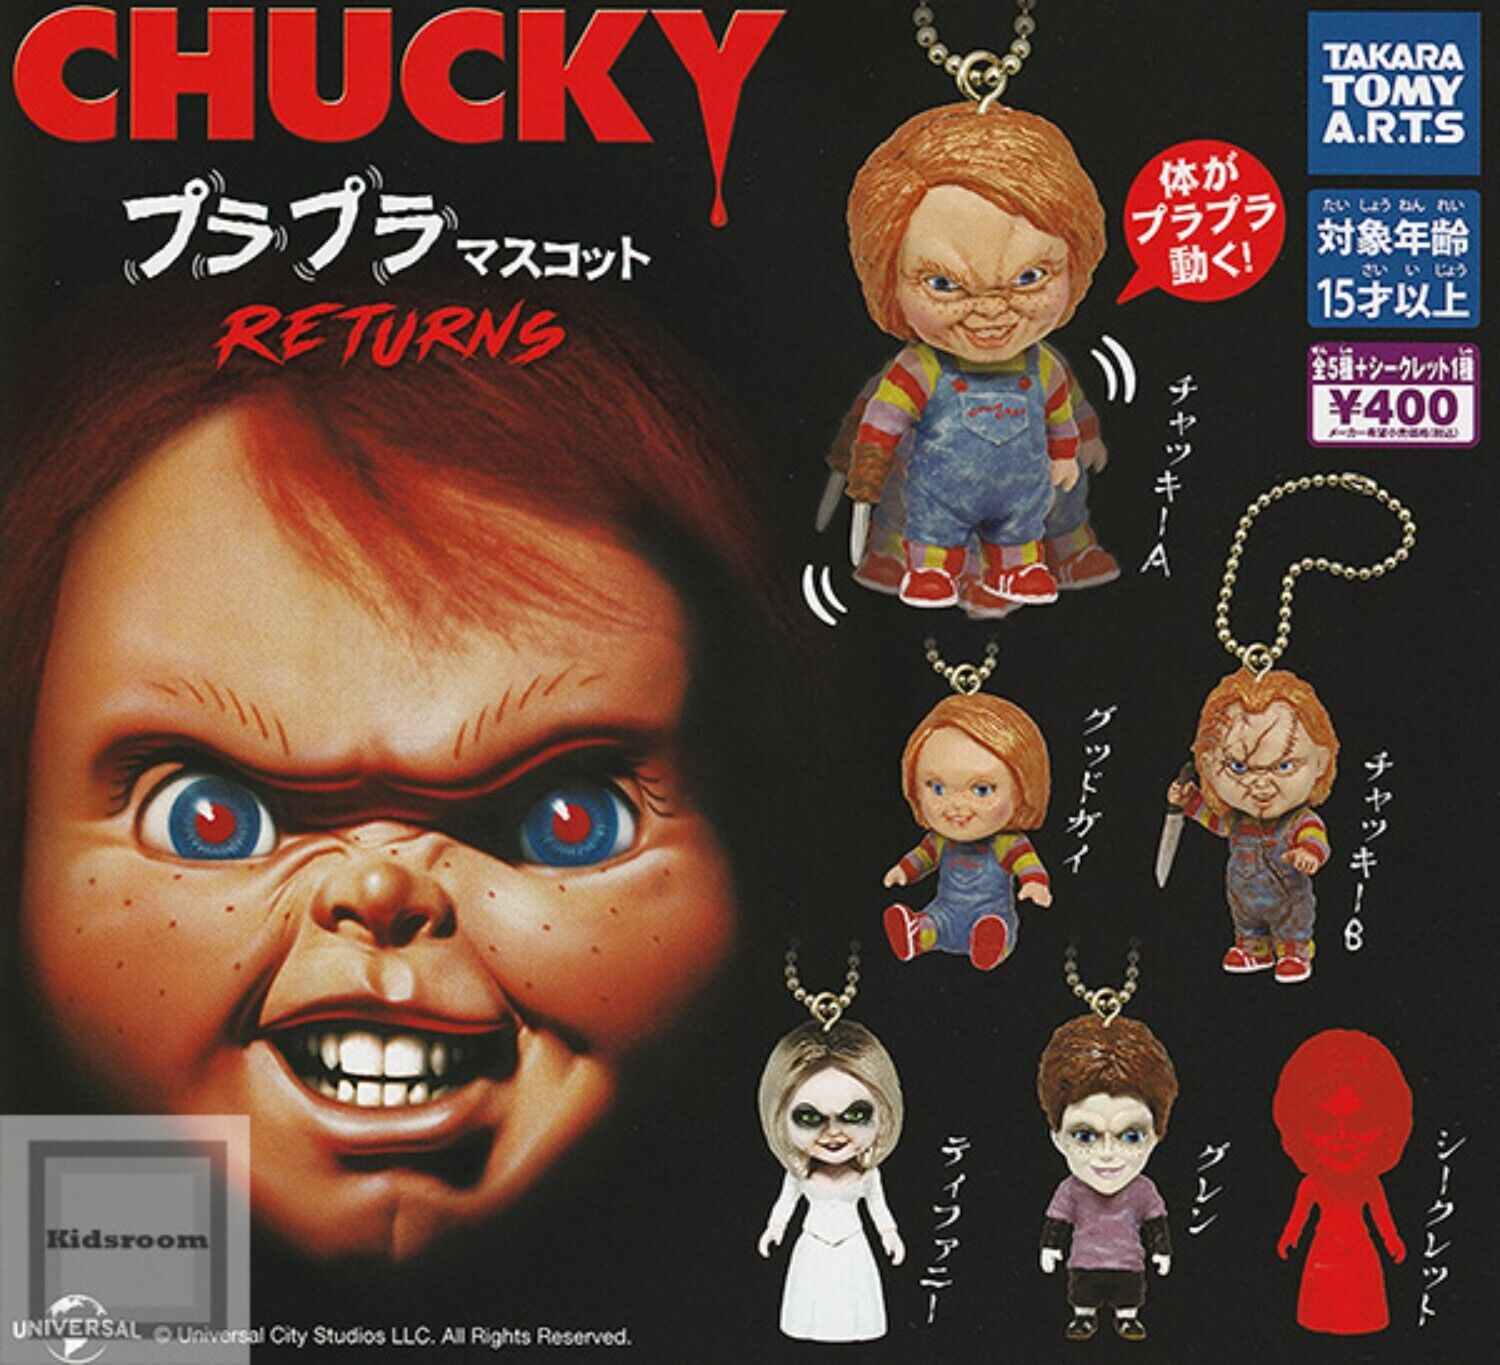 CHUCKY Purapura Mascot RETURNS Capsule Toy 6 Types Full Comp Set Gacha New Japan